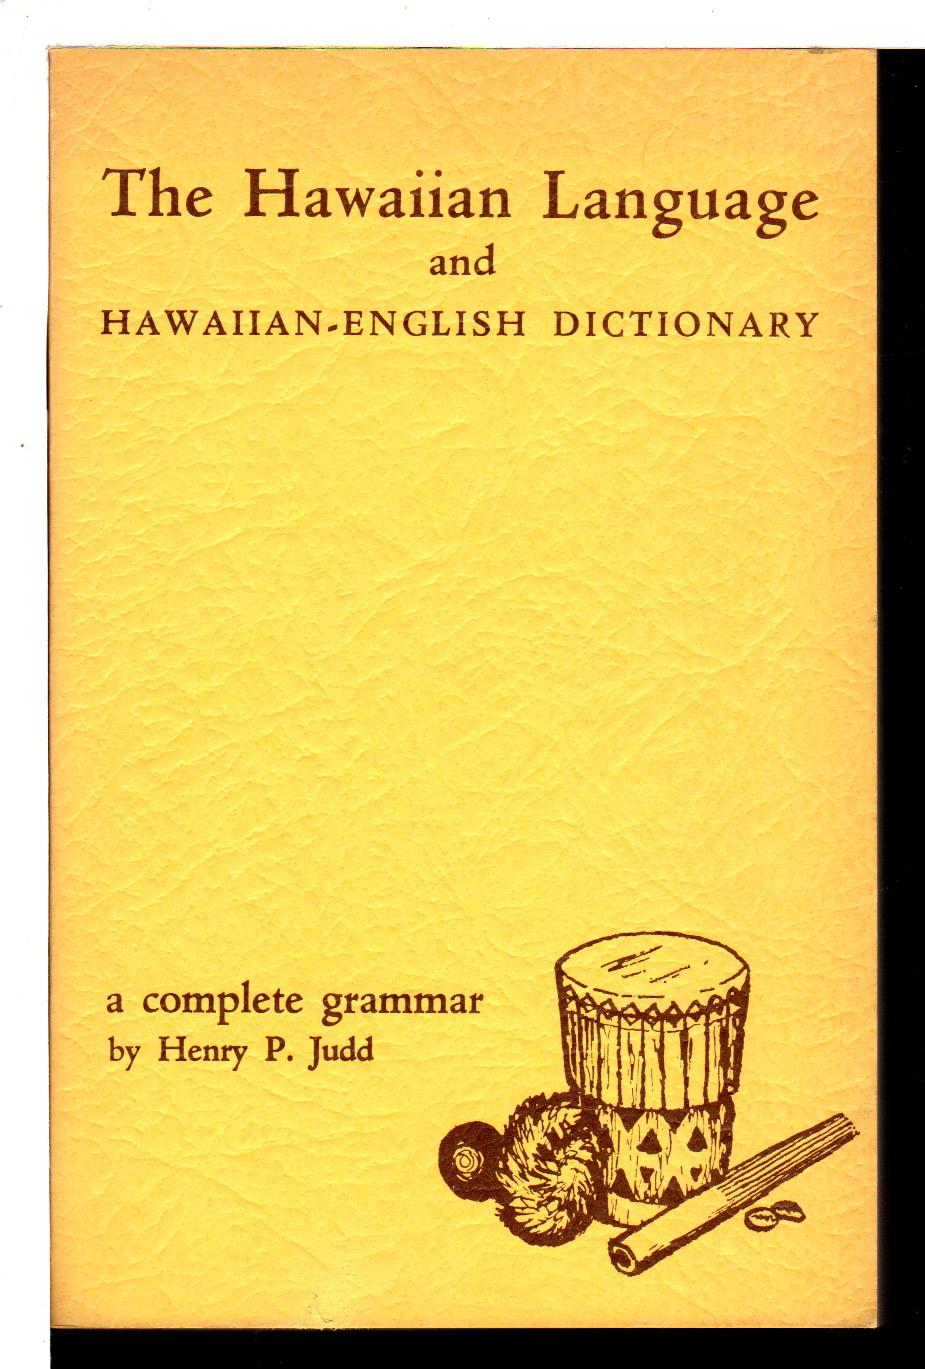 THE HAWAIIAN LANGUAGE and Hawaiian-English Dictionary: A Complete Grammar. - Judd, Henry P.